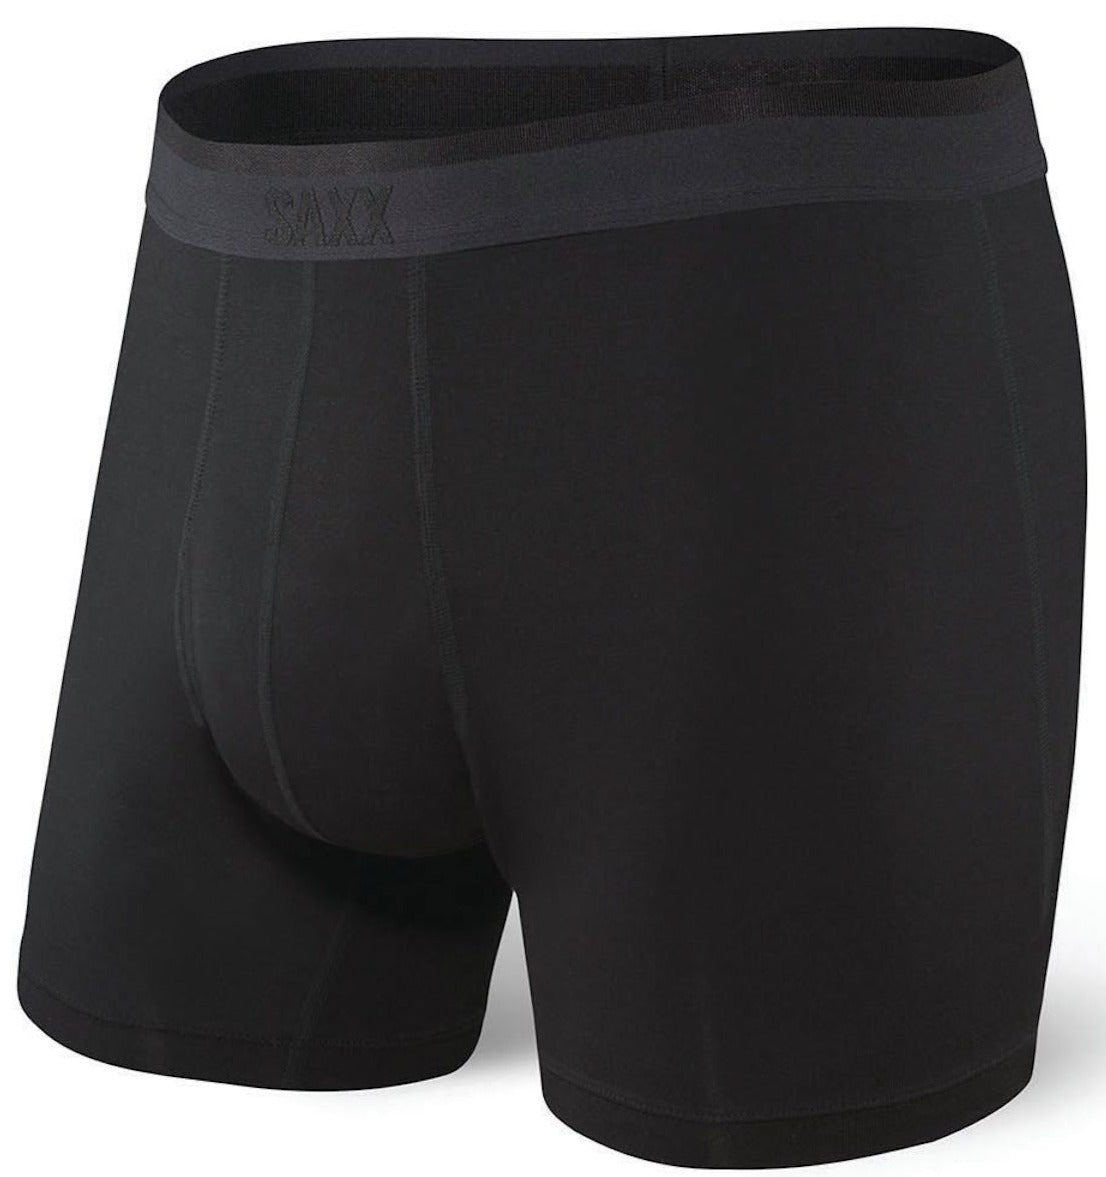 Premium Breathable Micro-Mesh Men's Boxer Briefs, 4 Pack - Black/Gray